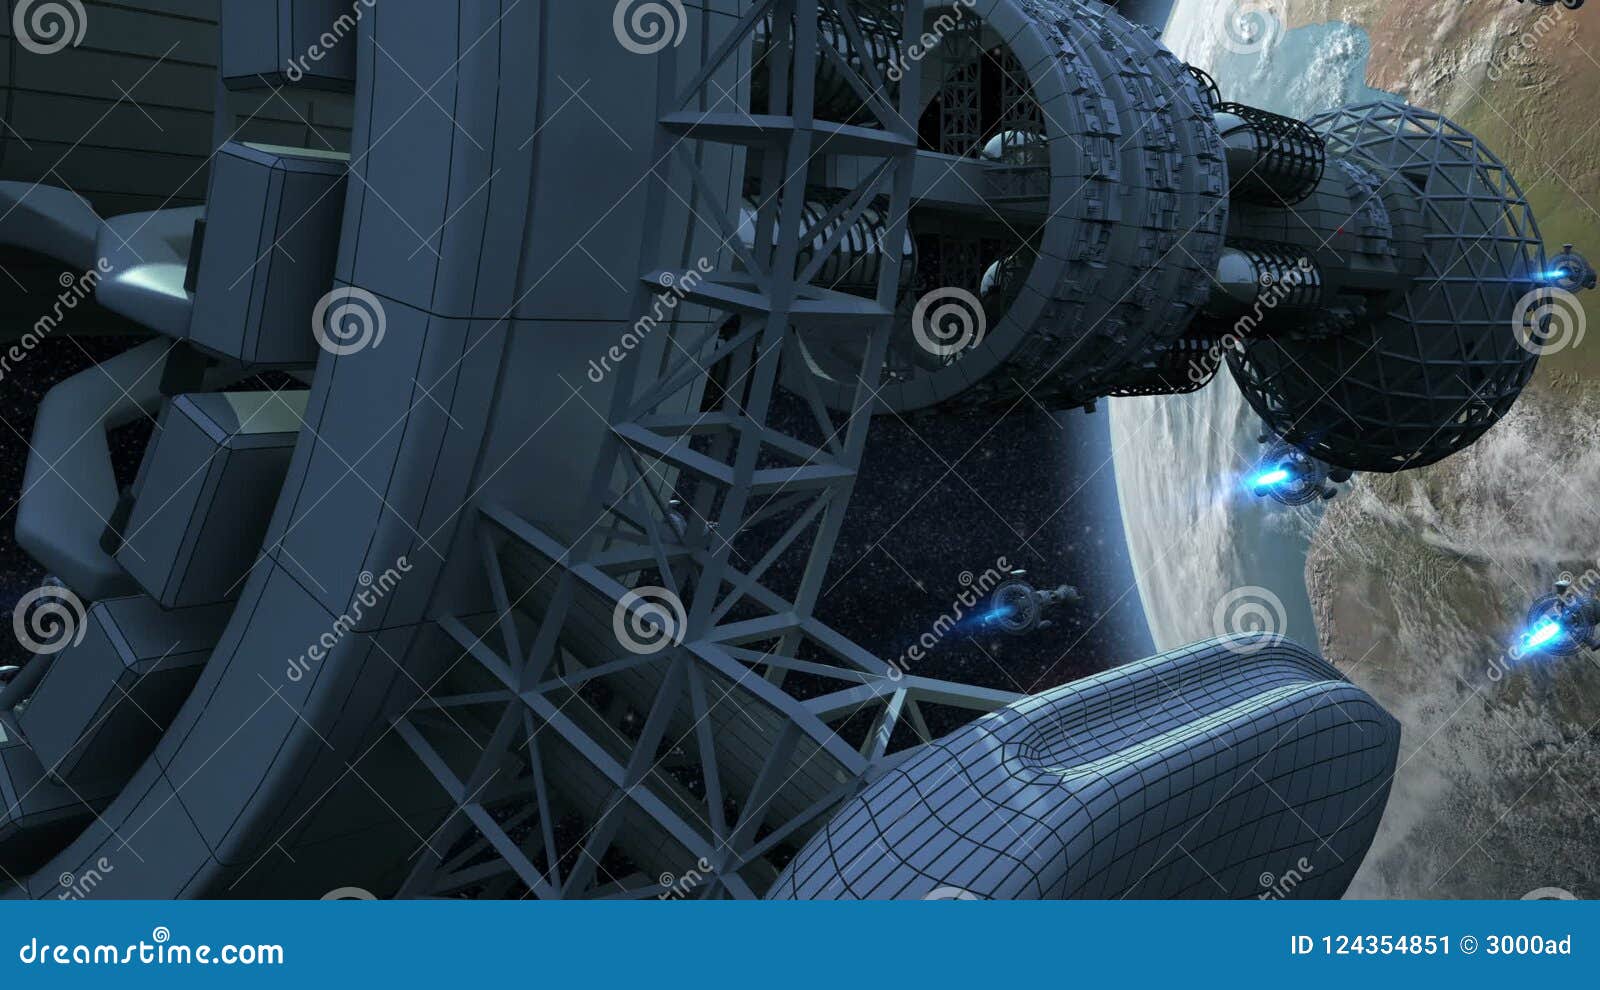 horror alien space station background